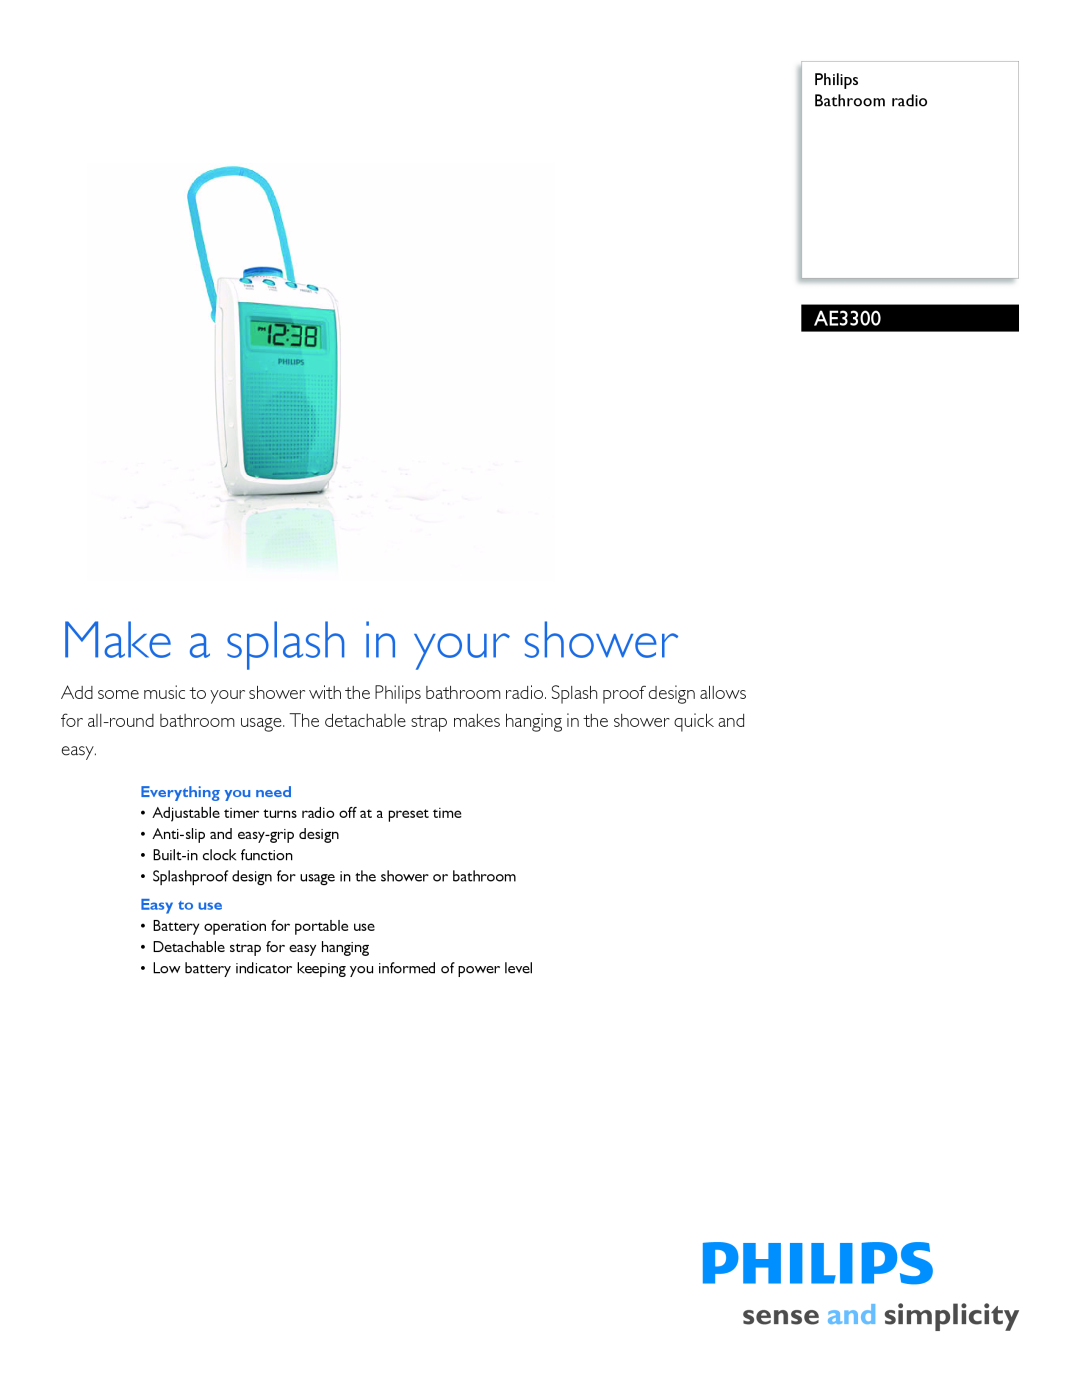 Philips AE3300 manual Philips Bathroom radio, Make a splash in your shower 